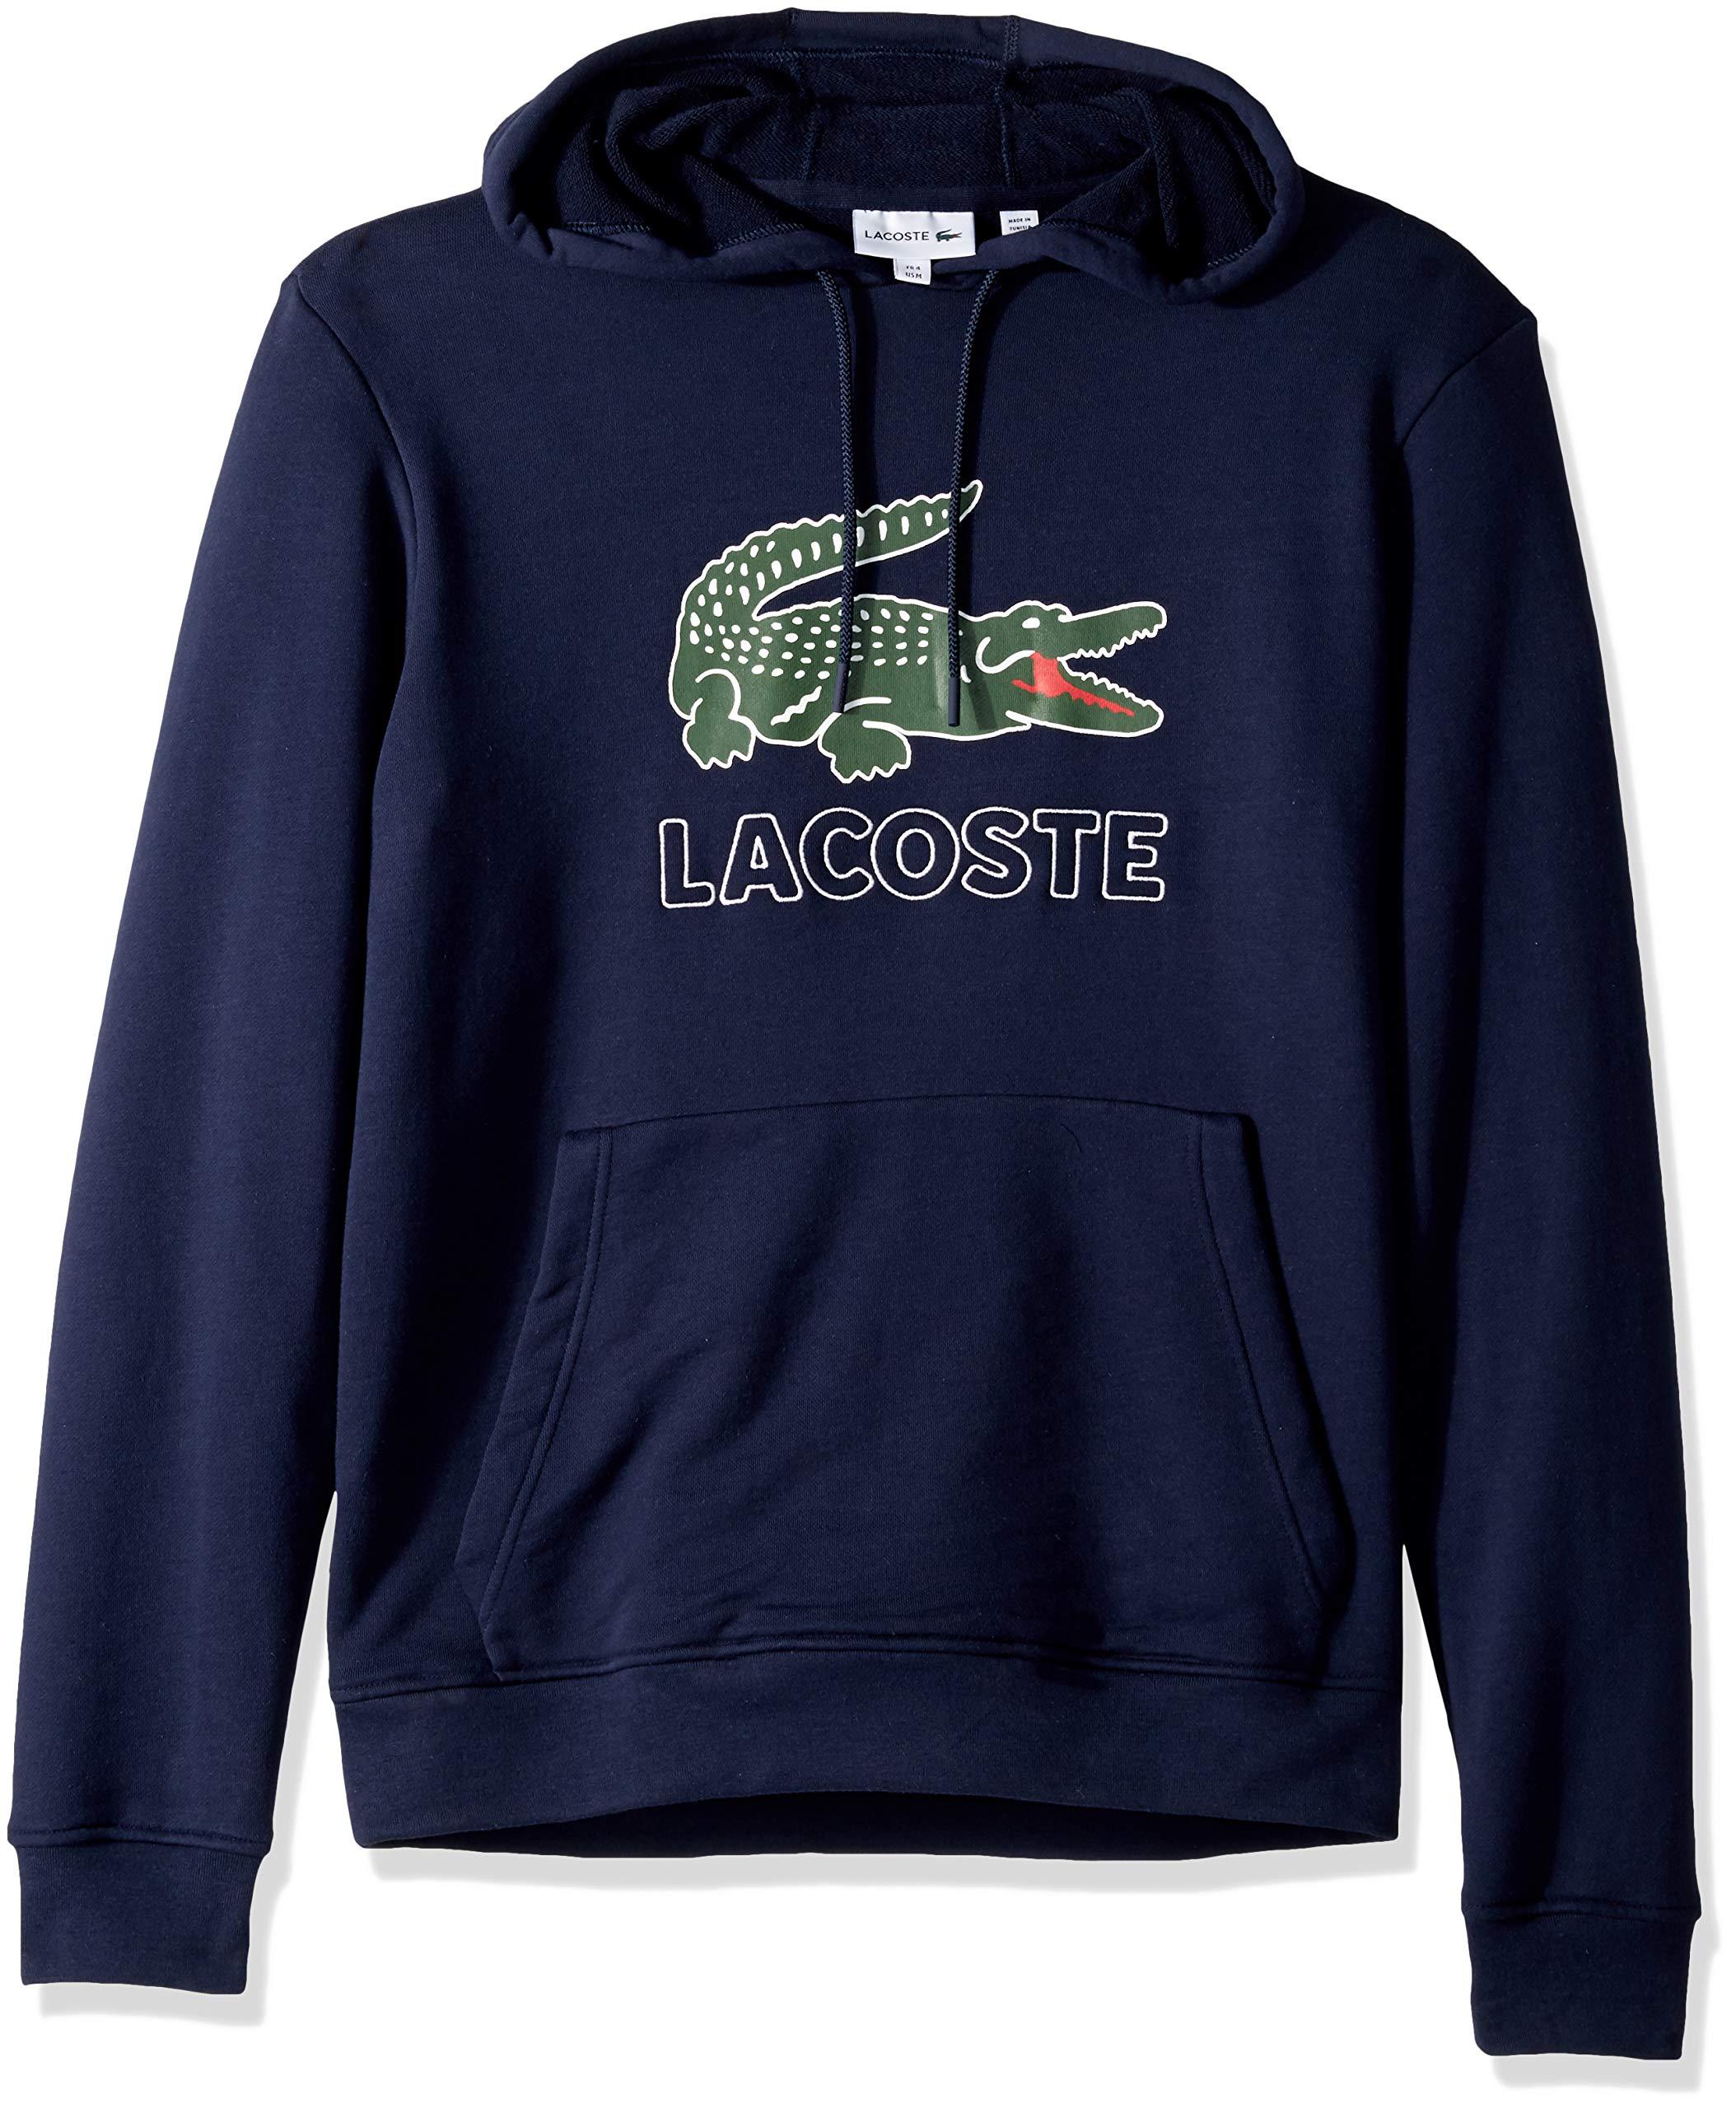 Lacoste Long Sleeve Graphic Croc Brushed Fleece Jersey Hoodie in Navy ...